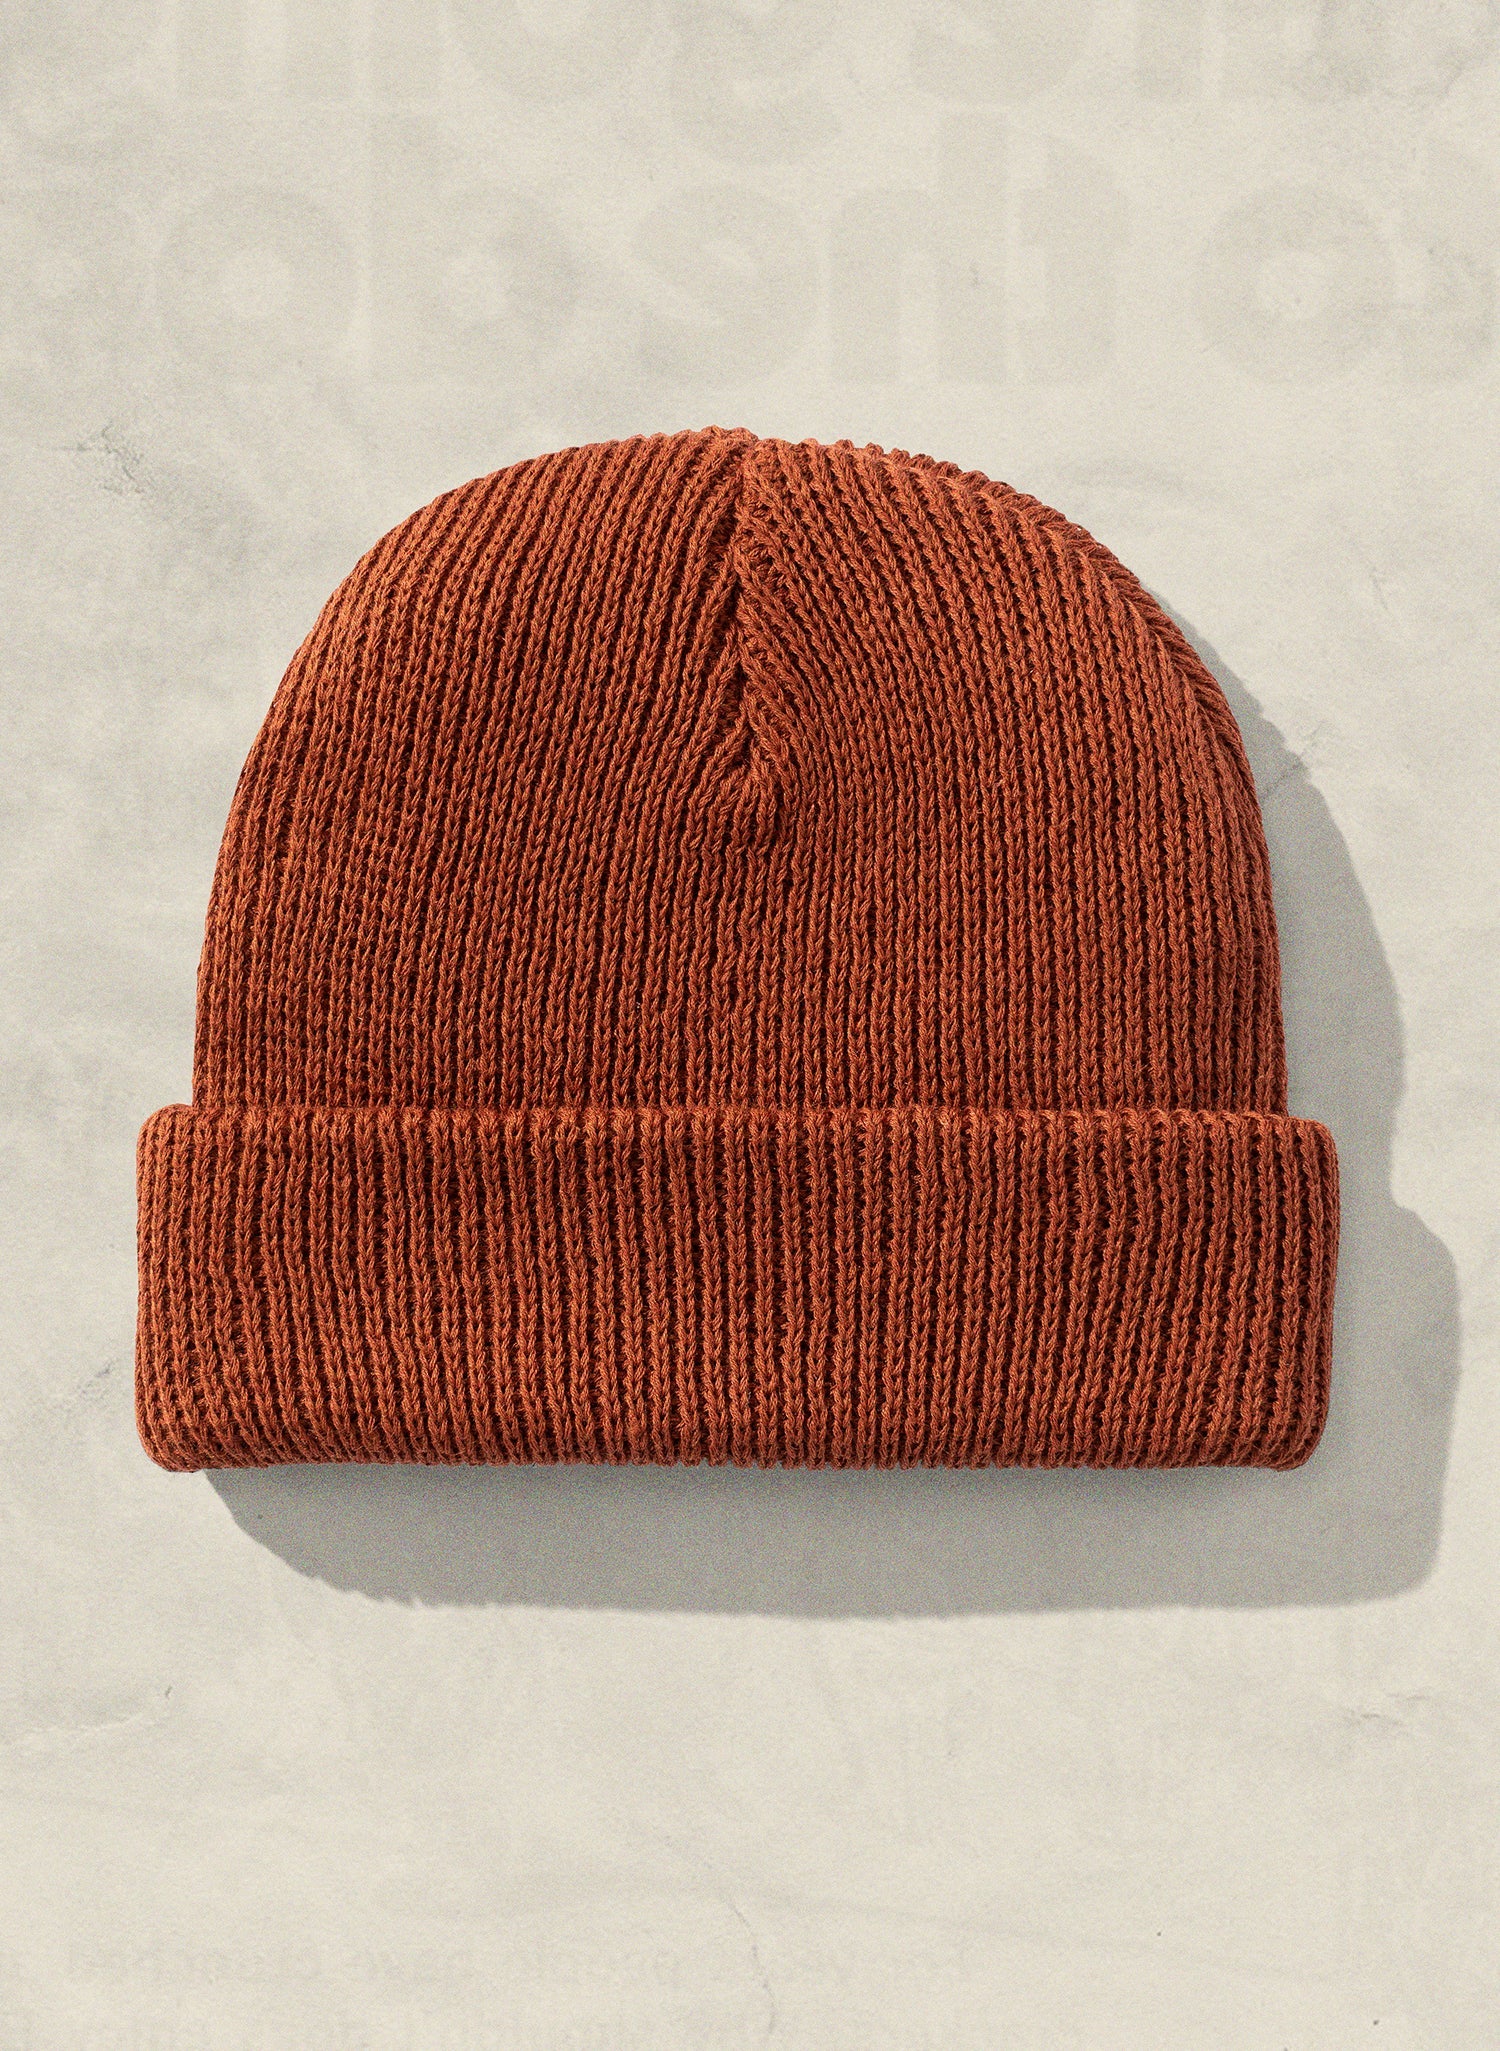 Weld Mfg Hemp Slacker Knit Ribbed Beanie Hat - Vintage Inspired Warm Comfortable Hat - Rust